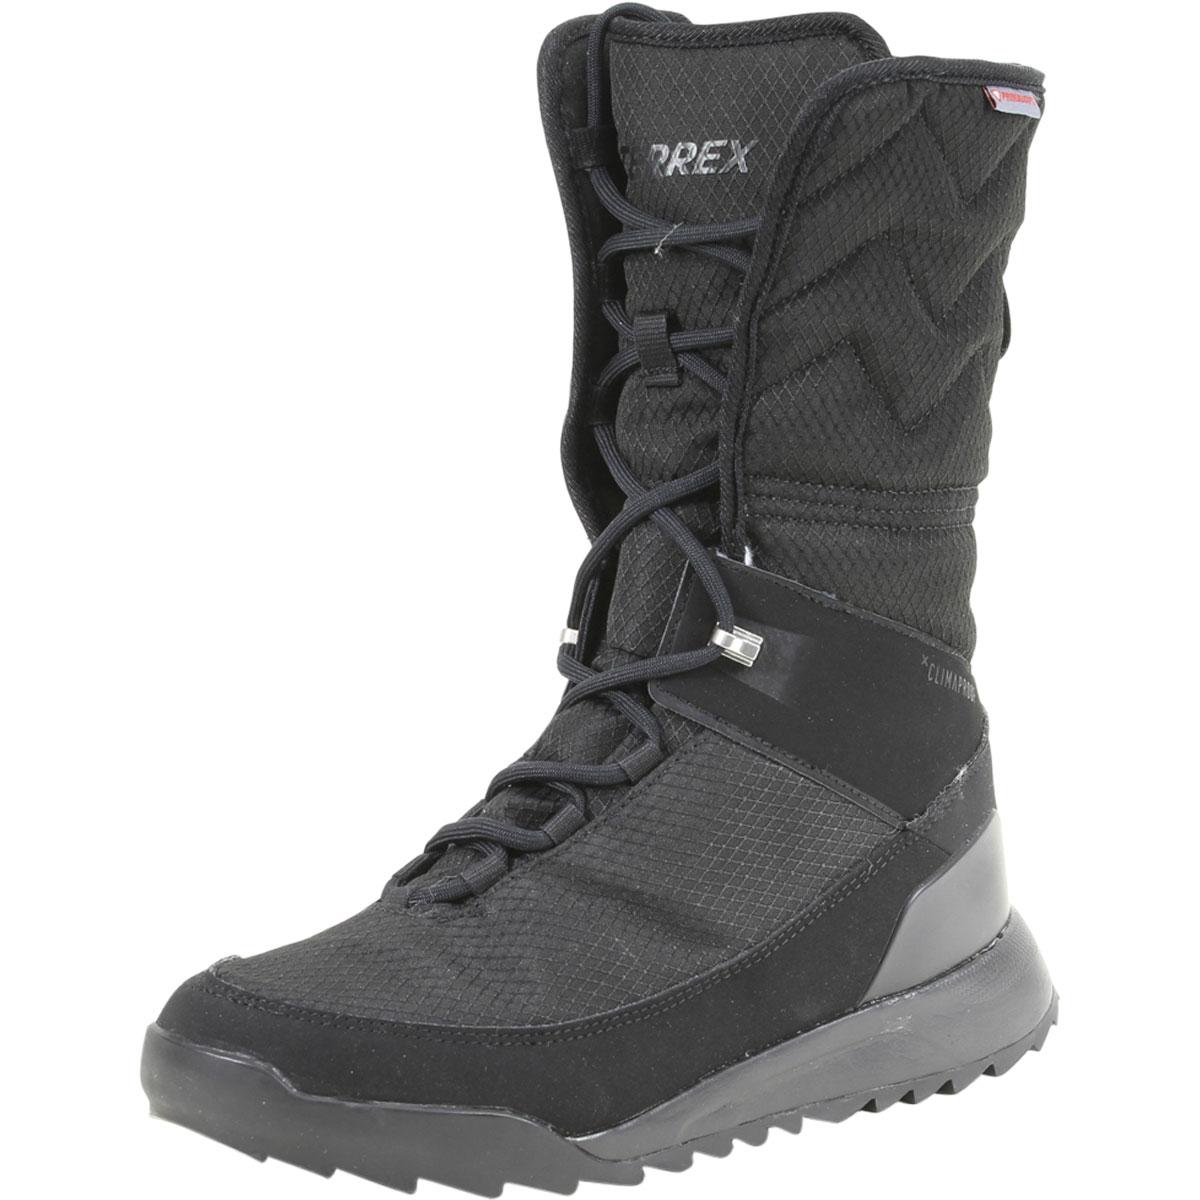 Adidas Women's Terrex Choleah High Climaproof Winter Boots Shoes - Black - 10 B(M) US